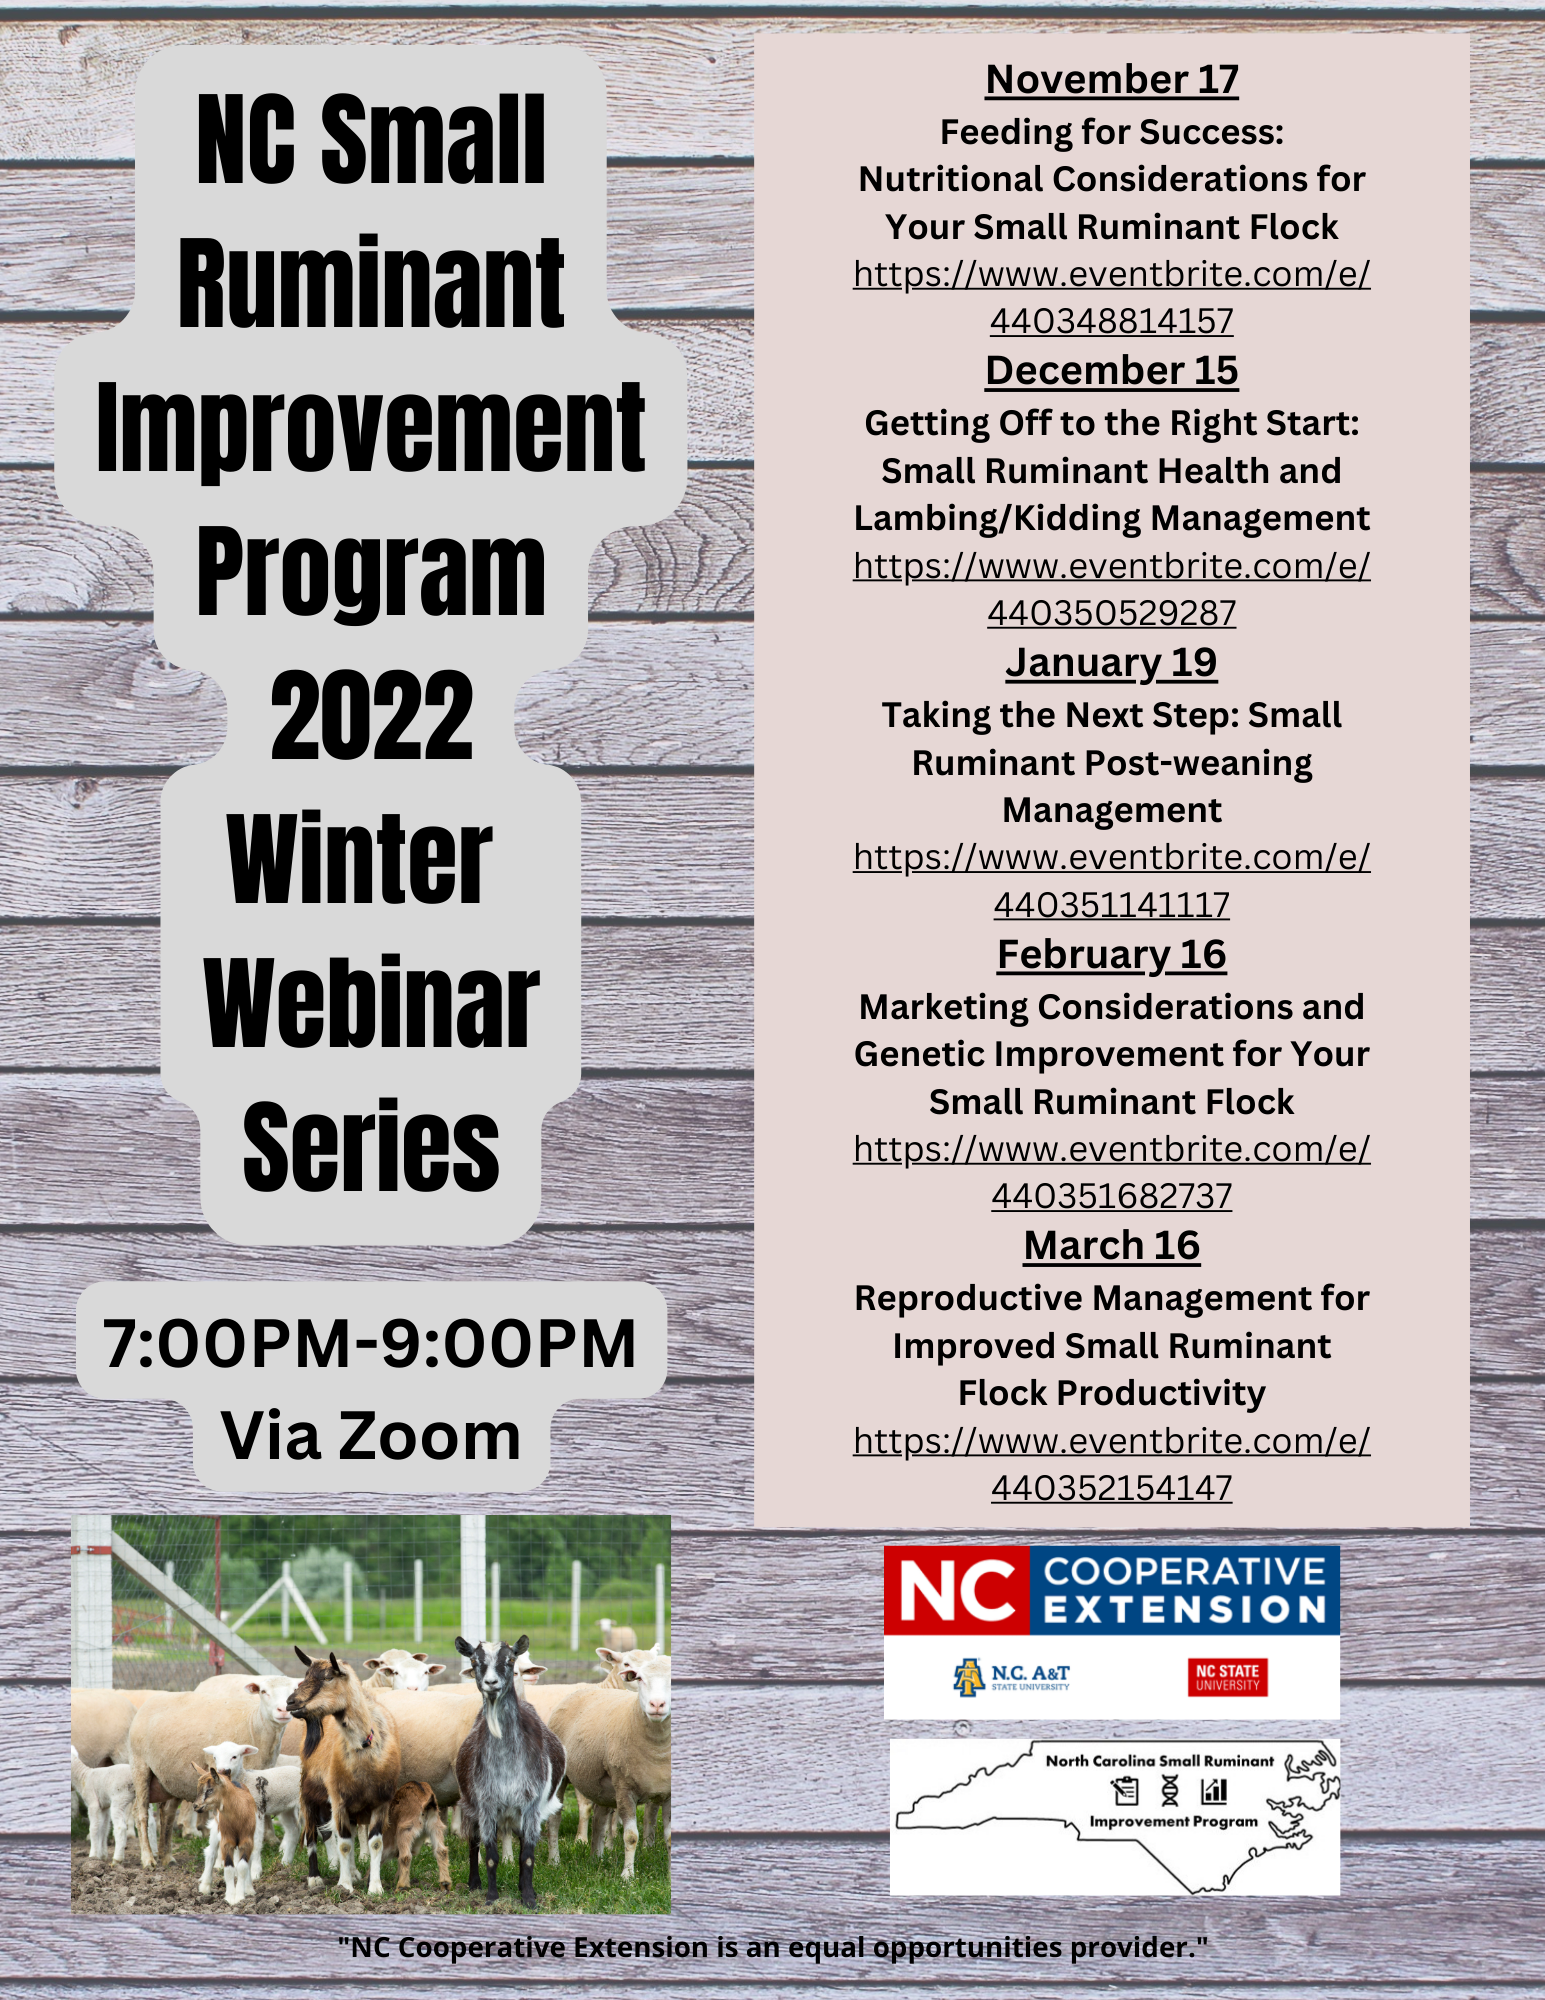 NC Small Ruminant Improvement Program 2022. Winter Webinar Series.